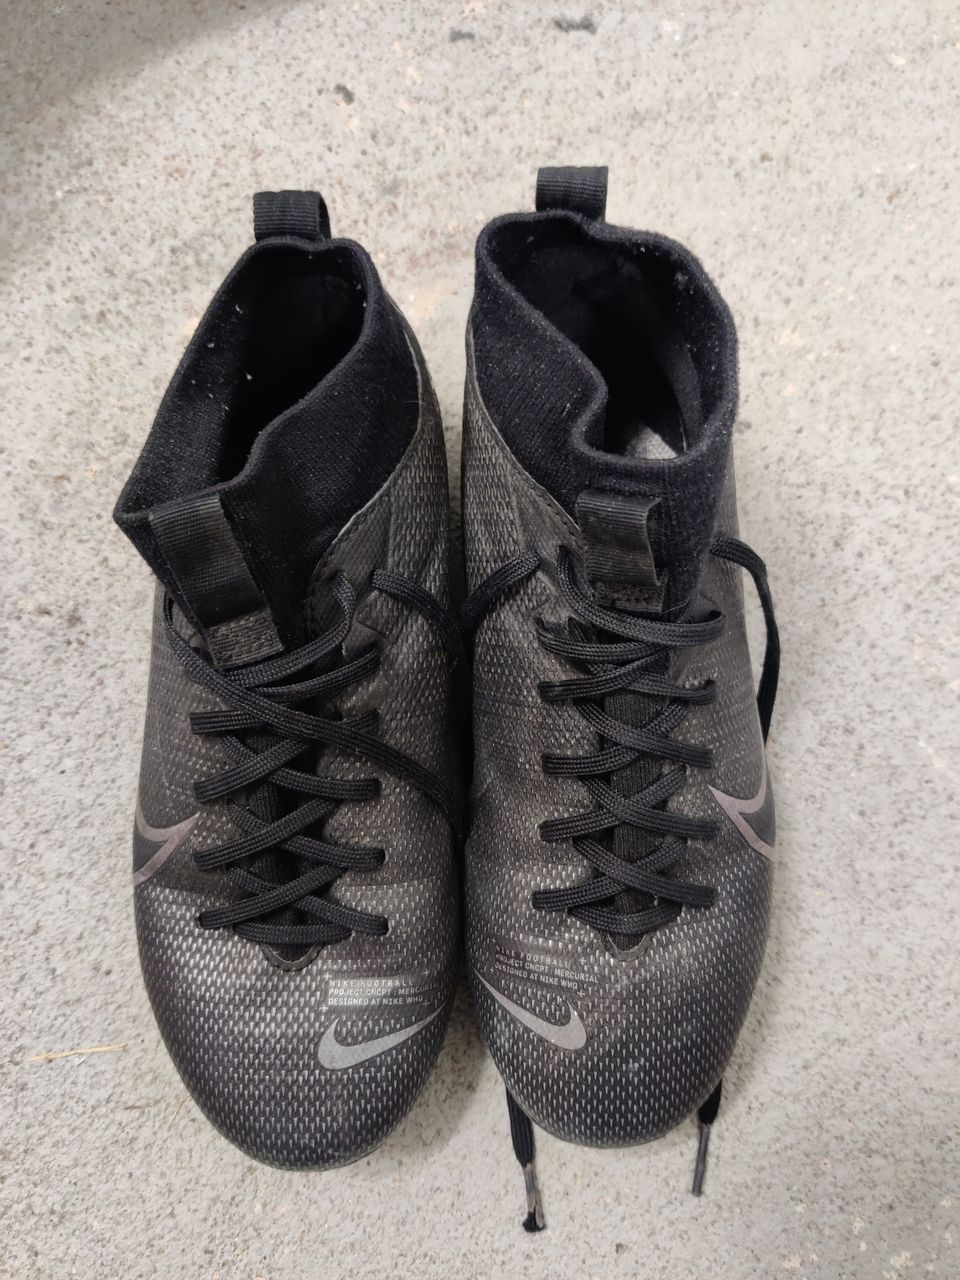 Jalkapallo kengät Nike Merc